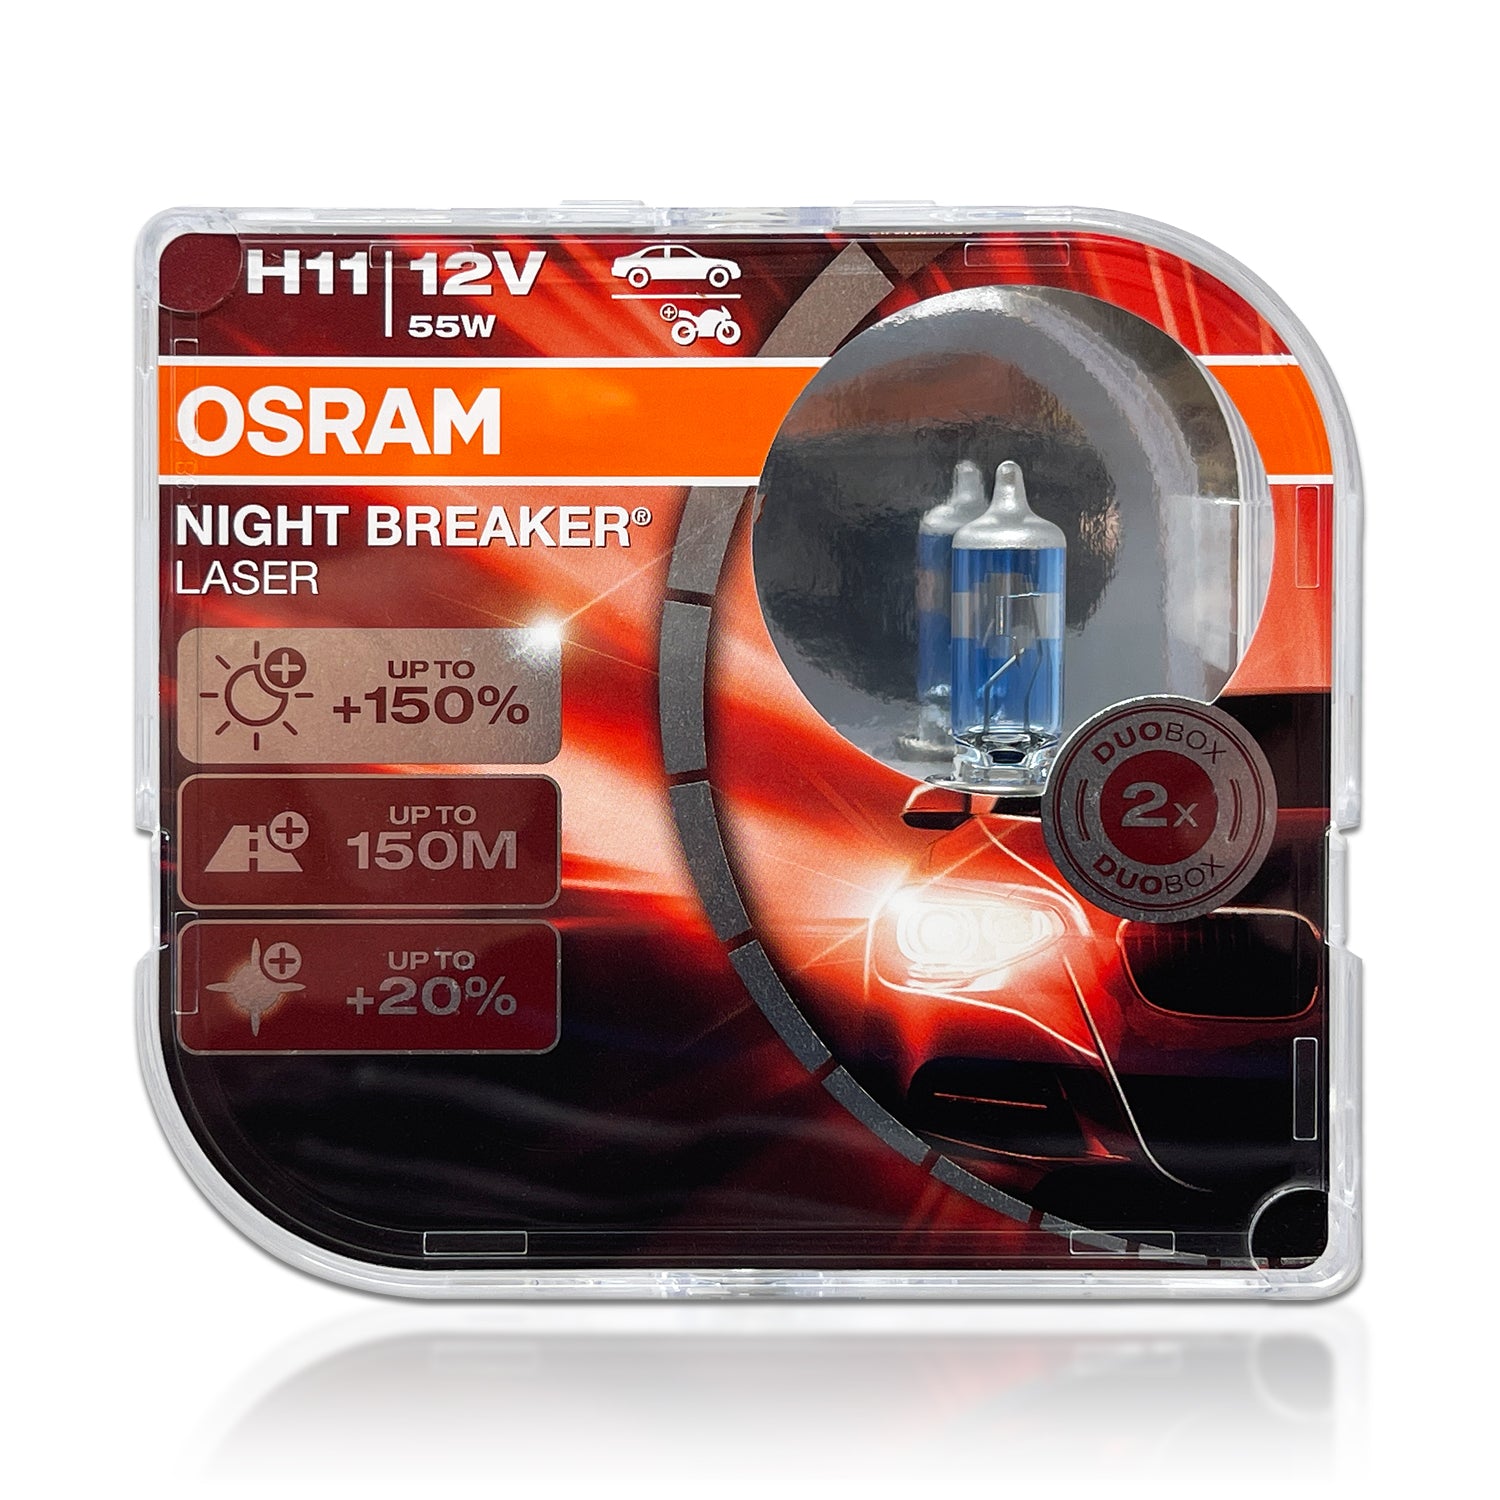 Osram H11 PGJ19-2 64211 NBL Night Breaker Laser Car headlight Bulb (Natural  White) (Twin) 12V 55W at Rs 2600/pair, Car LED Headlight Bulb in Kolkata